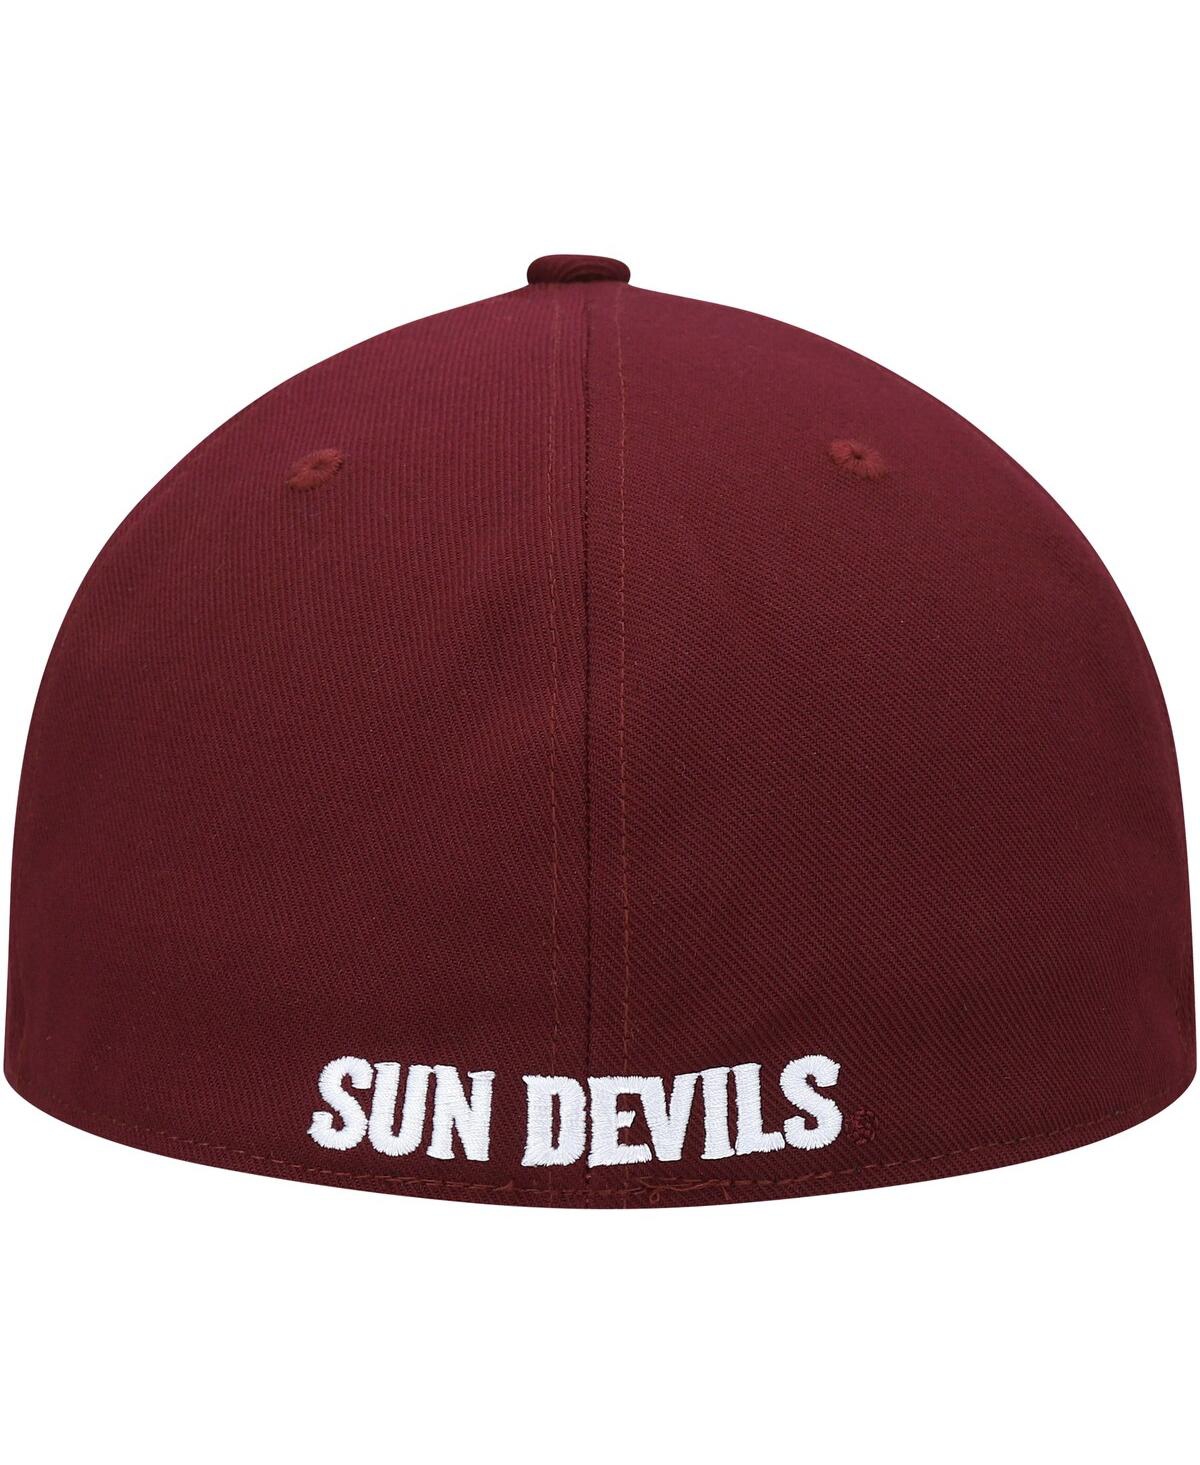 Shop Adidas Originals Men's Adidas Maroon Arizona State Sun Devils Baseball On-field Fitted Hat